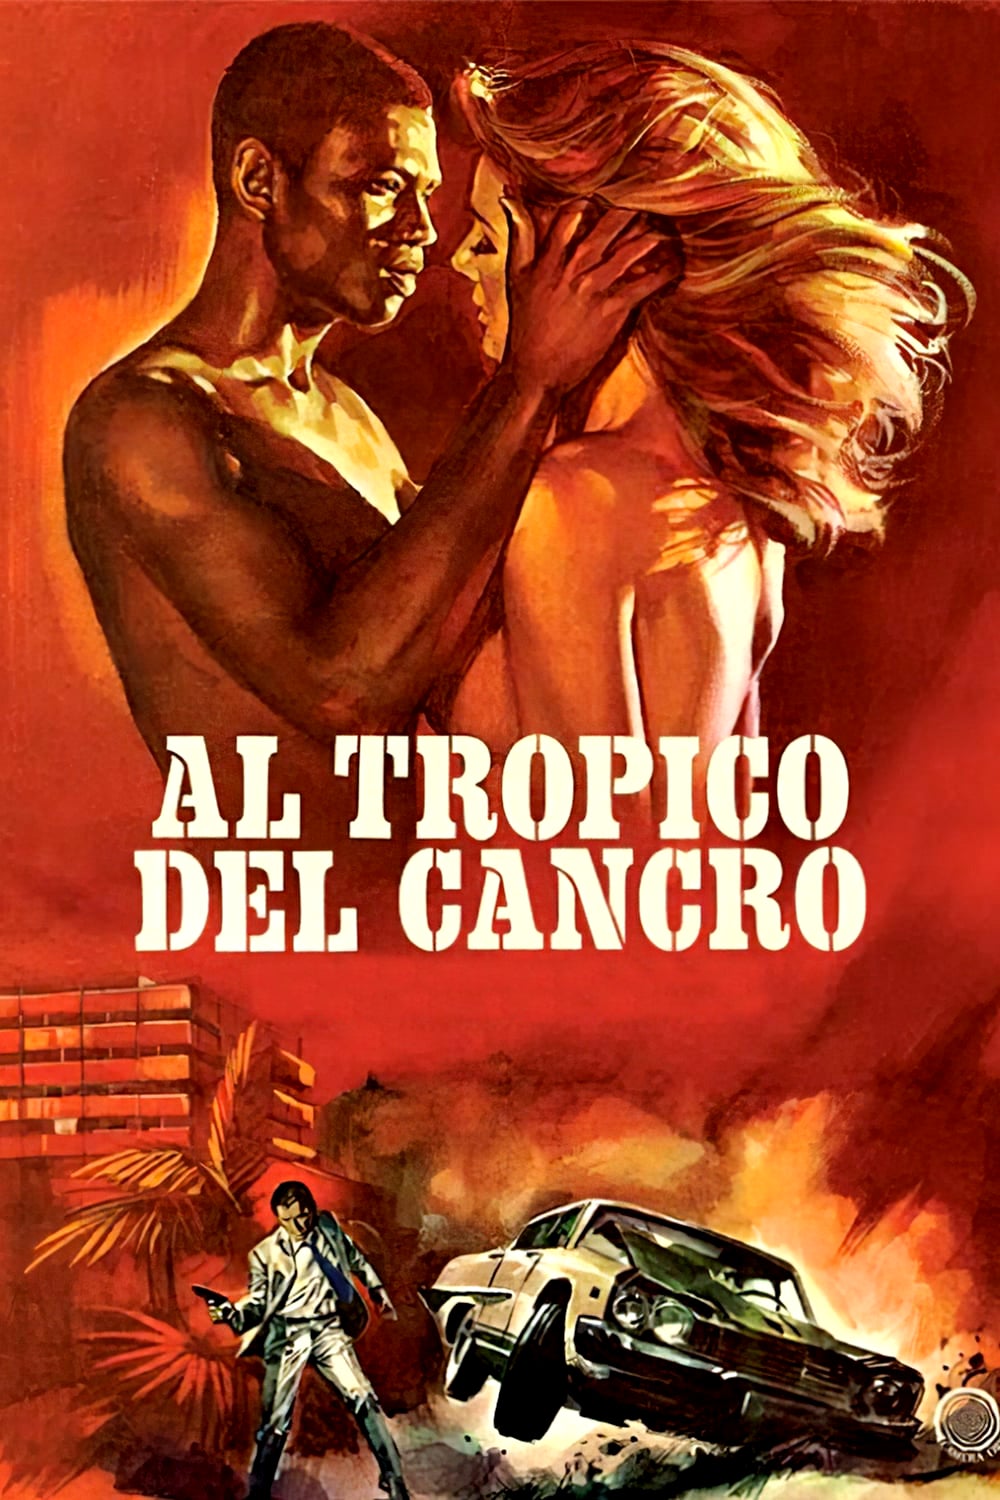 Al tropico del cancro [HD] (1972)